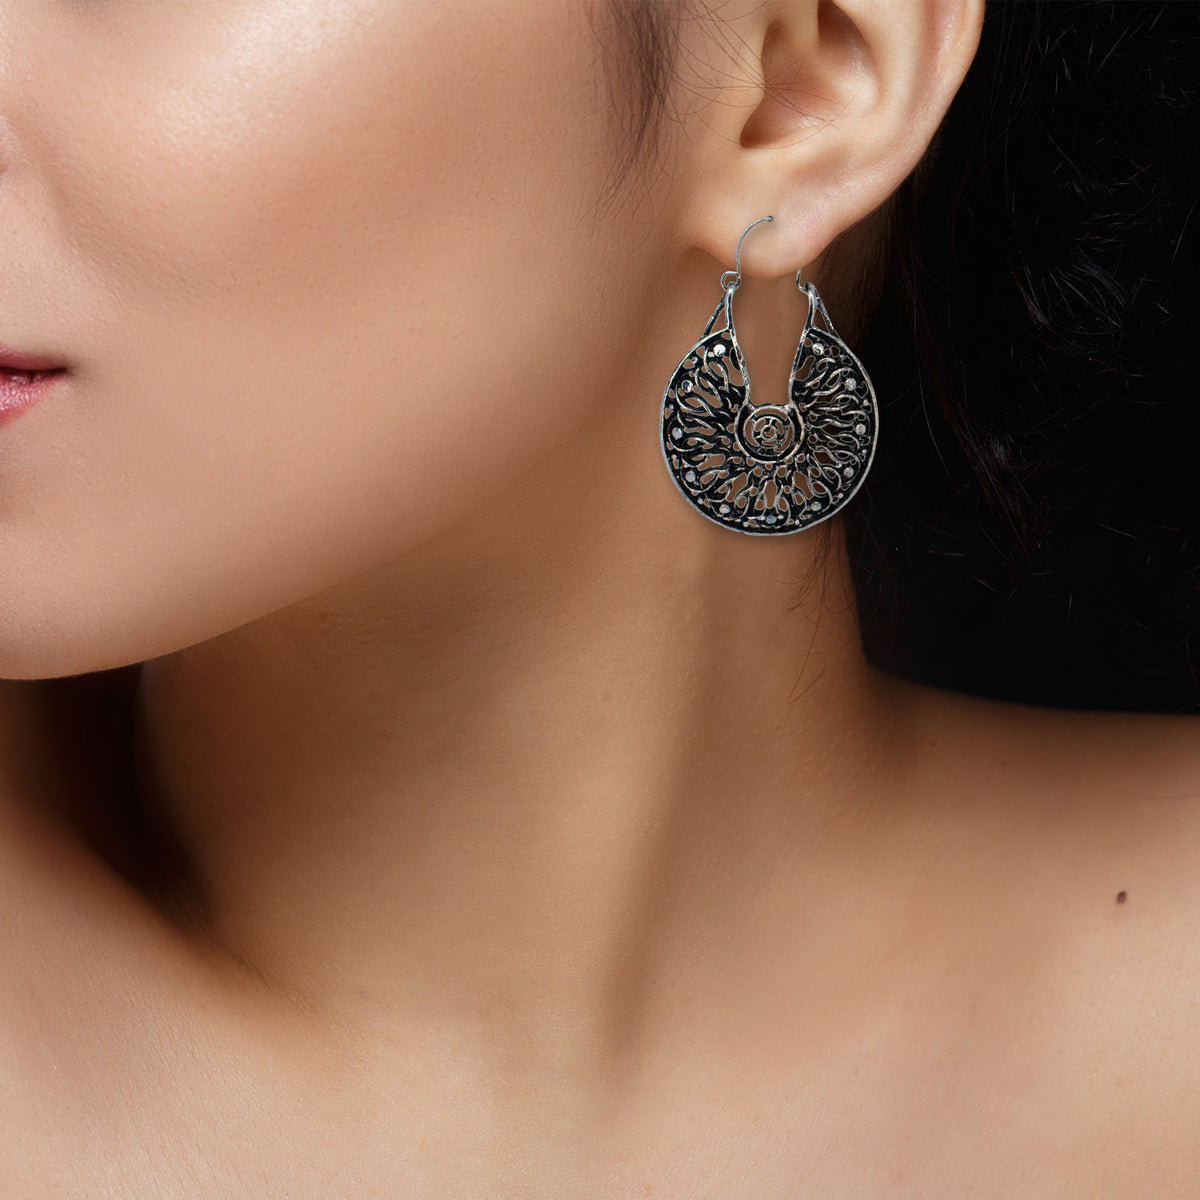 Abhinn Antique Black Plated Silver Oxidised Hoop Earrings For Women